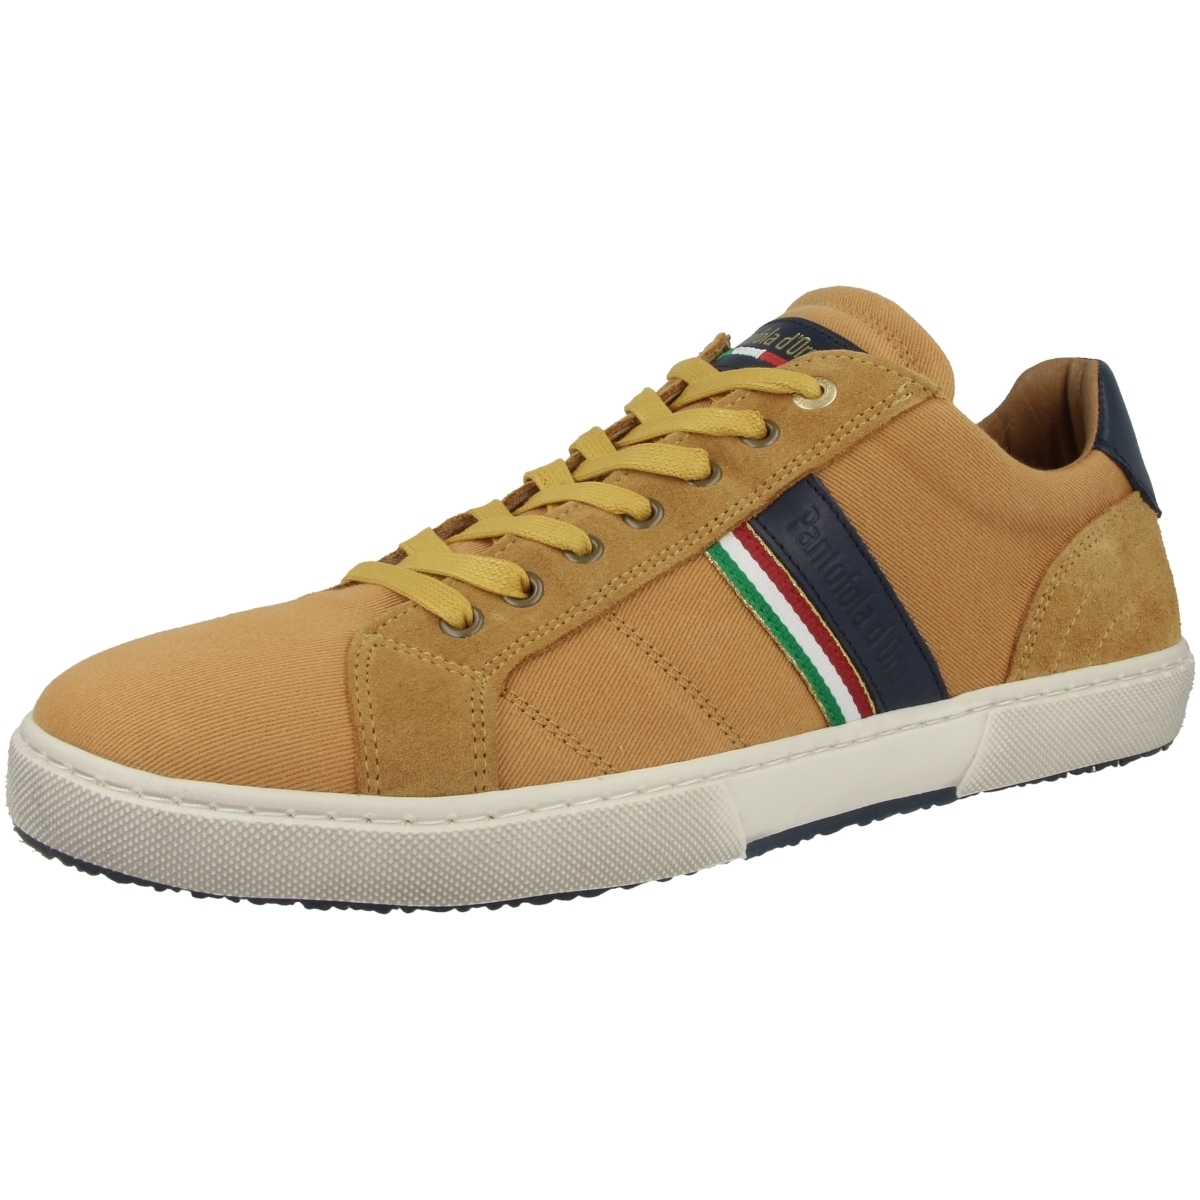 Pantofola d Oro Modena Canvas Uomo Low Sneaker gelb